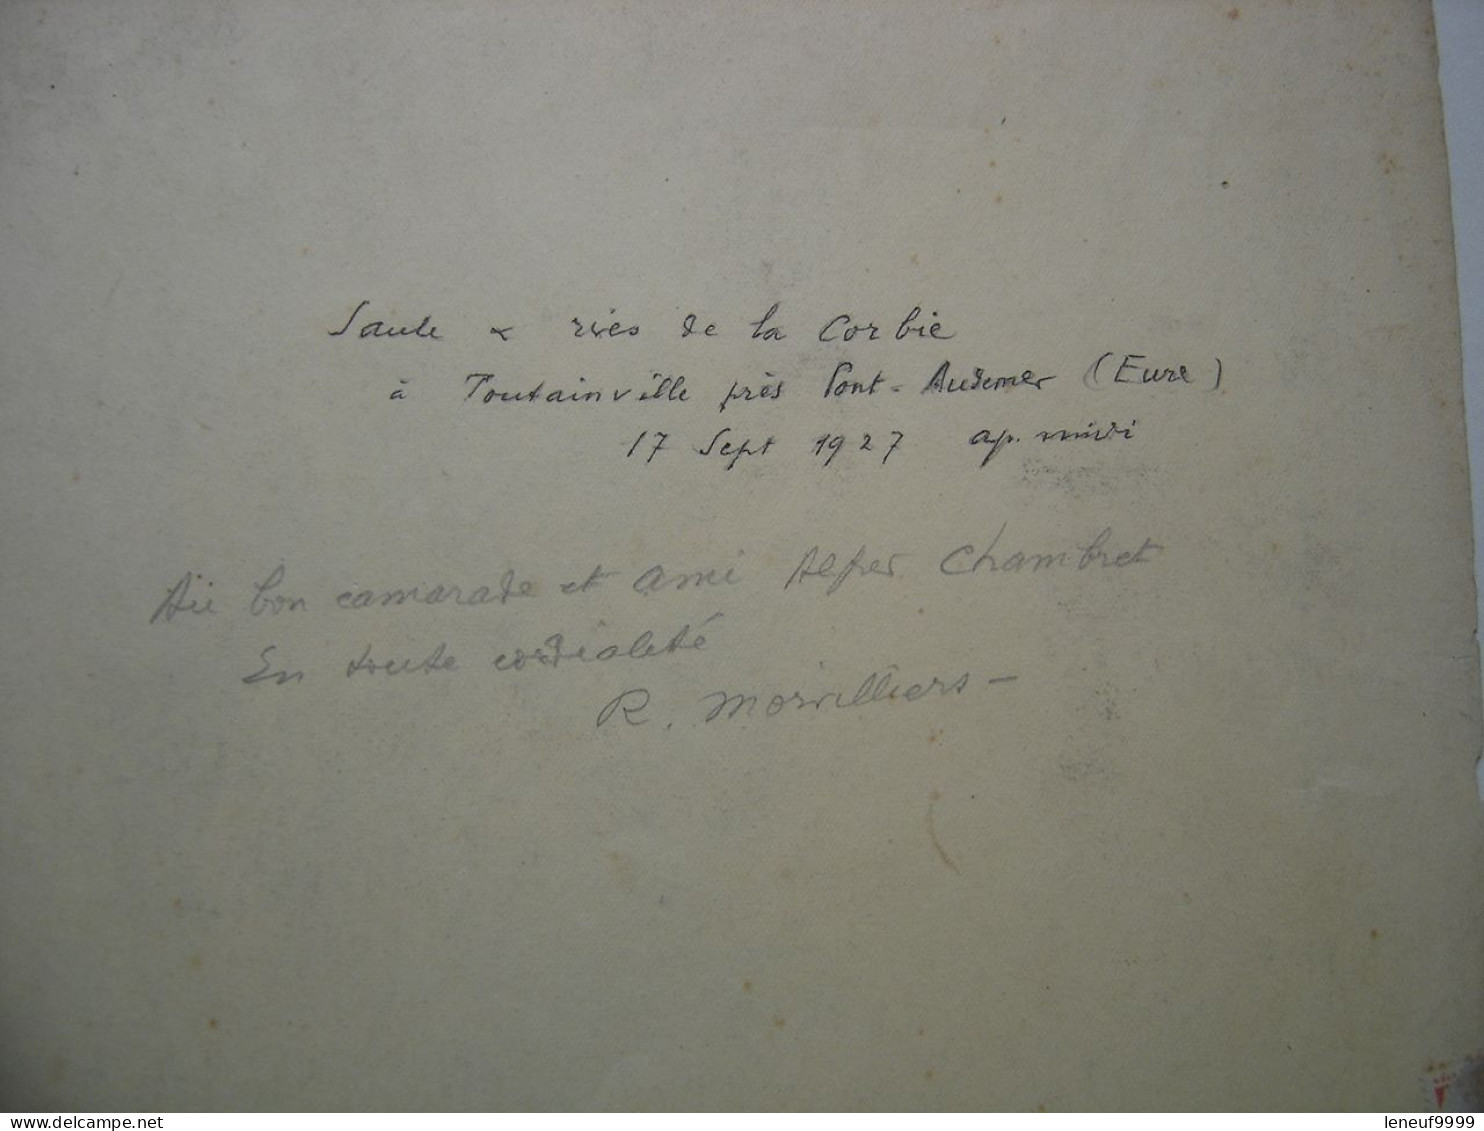 Estampe Signee Et Dedicacee R MORVILLIERS 1927 Situee Dans L'Eure Corbie Toutainville - Hedendaagse Kunst